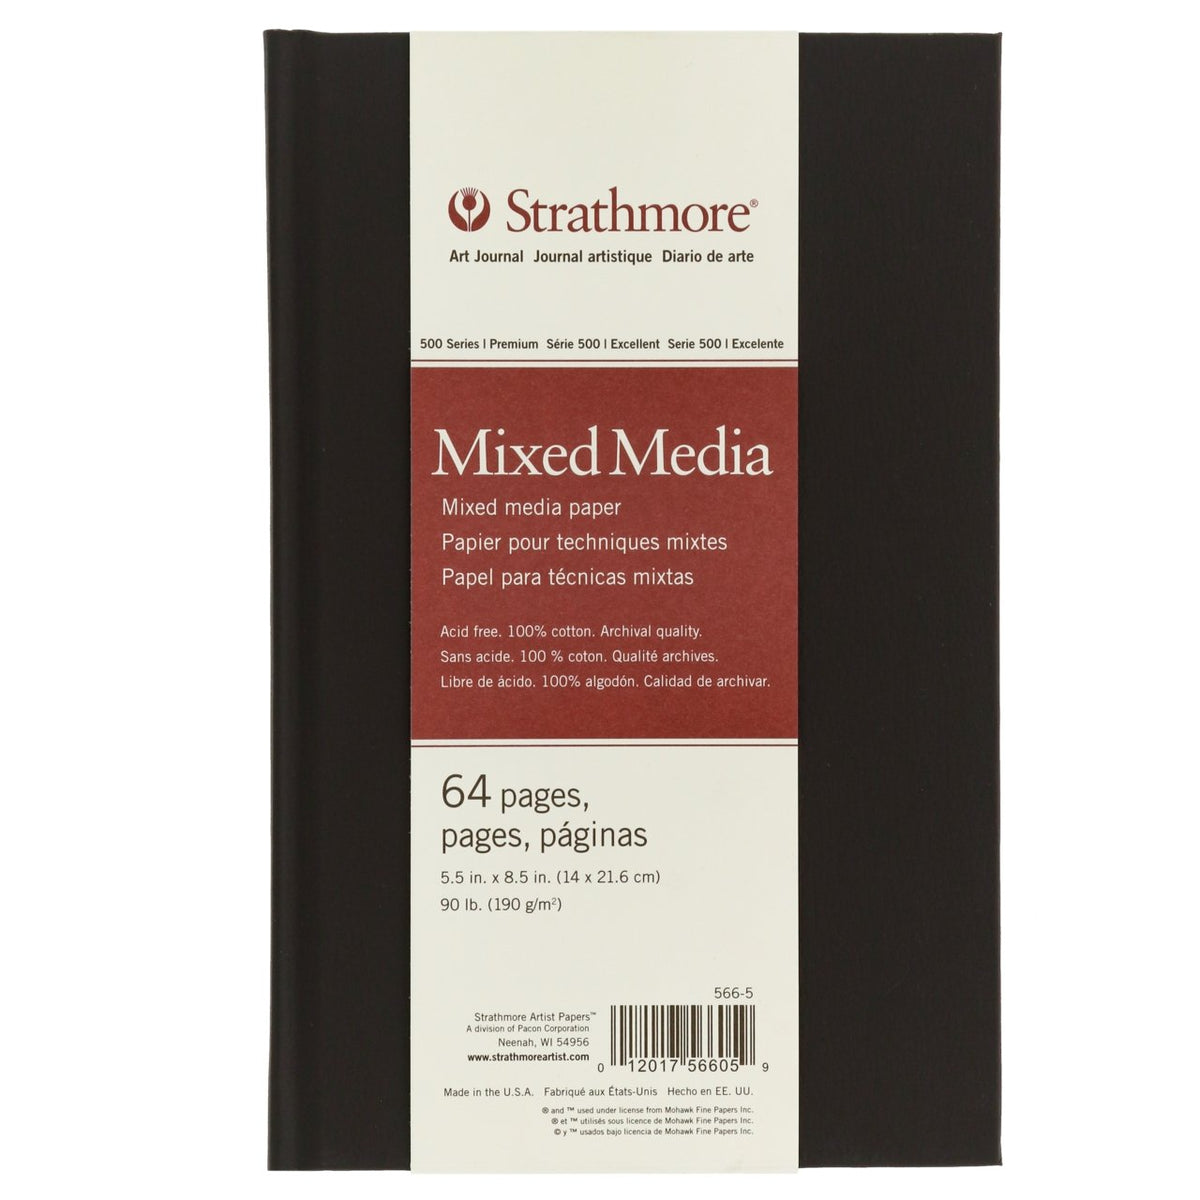 Strathmore 500 Series Visual Mixed Media Journal, 9x12 Vellum